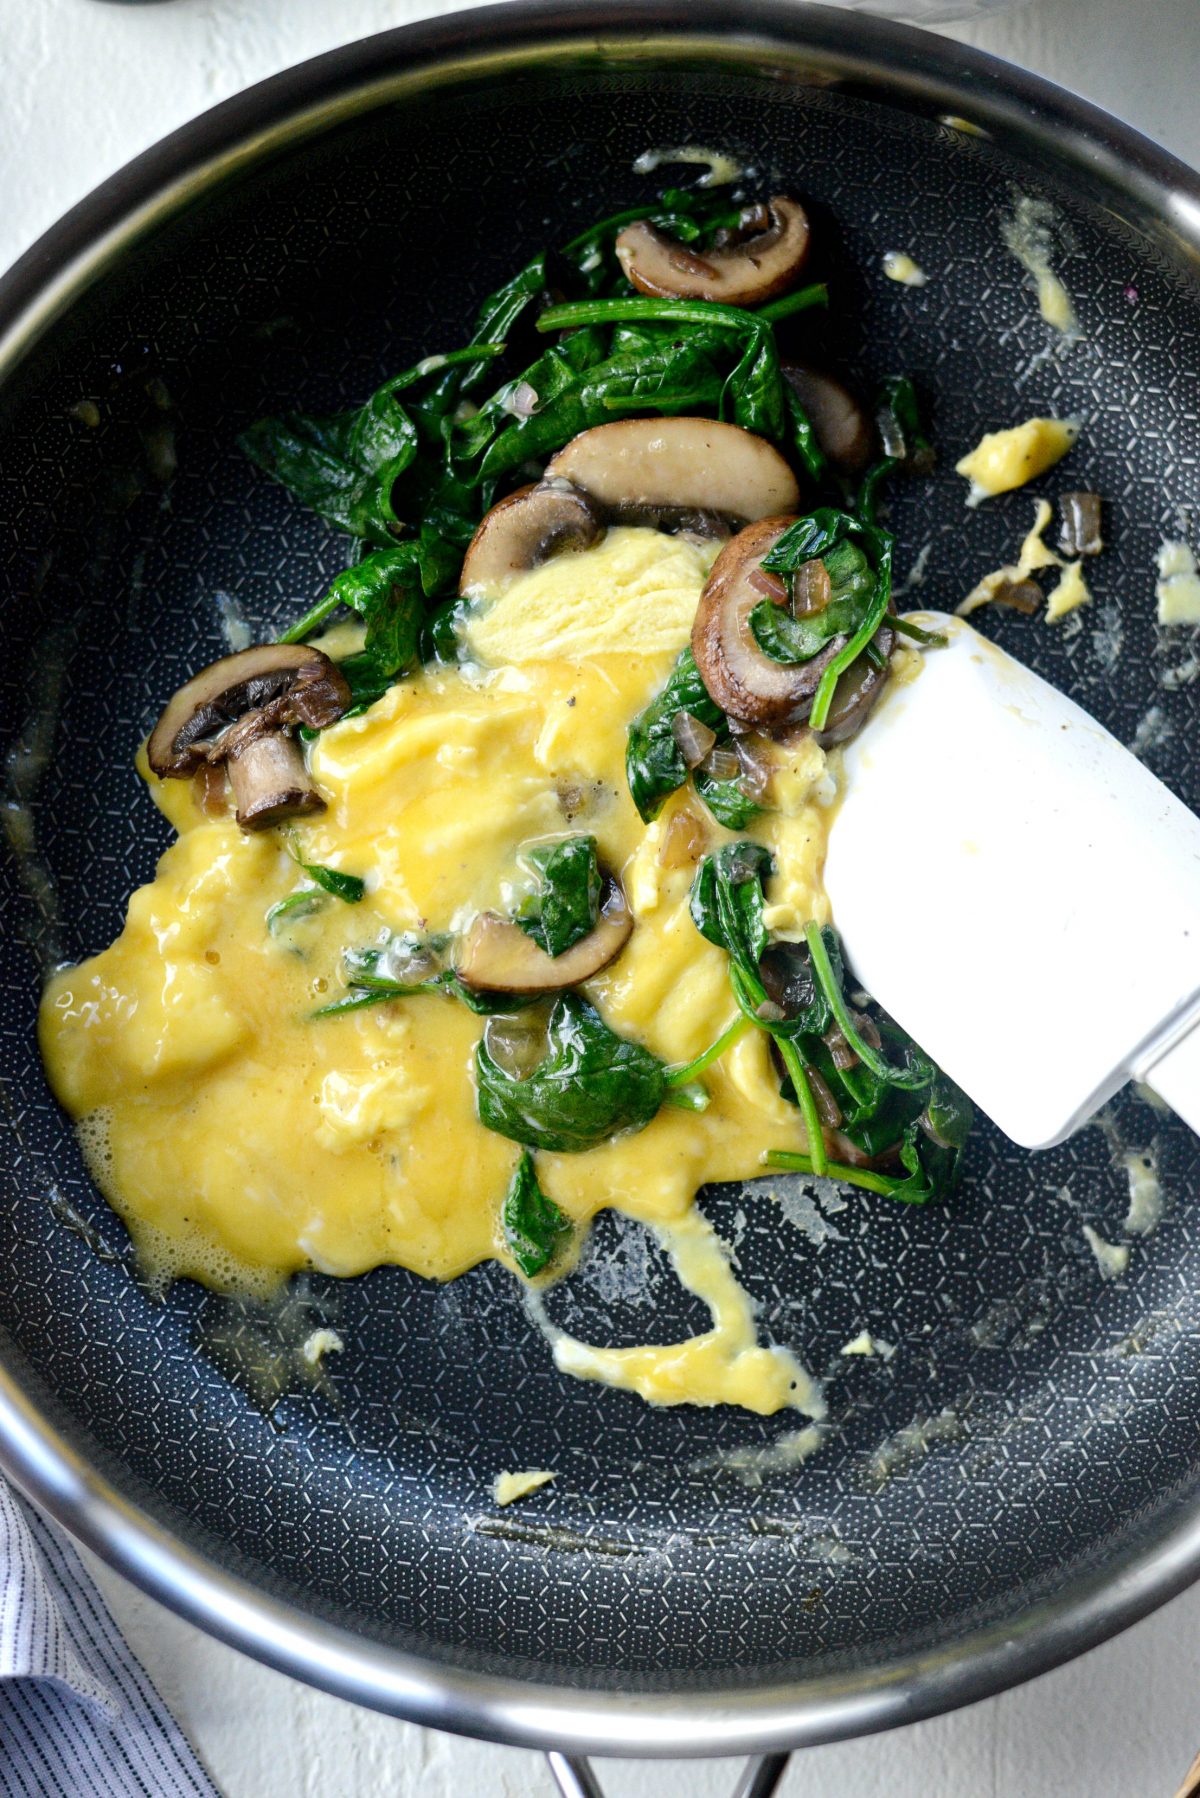 scramble eggs and incorporate the mushroom mixture